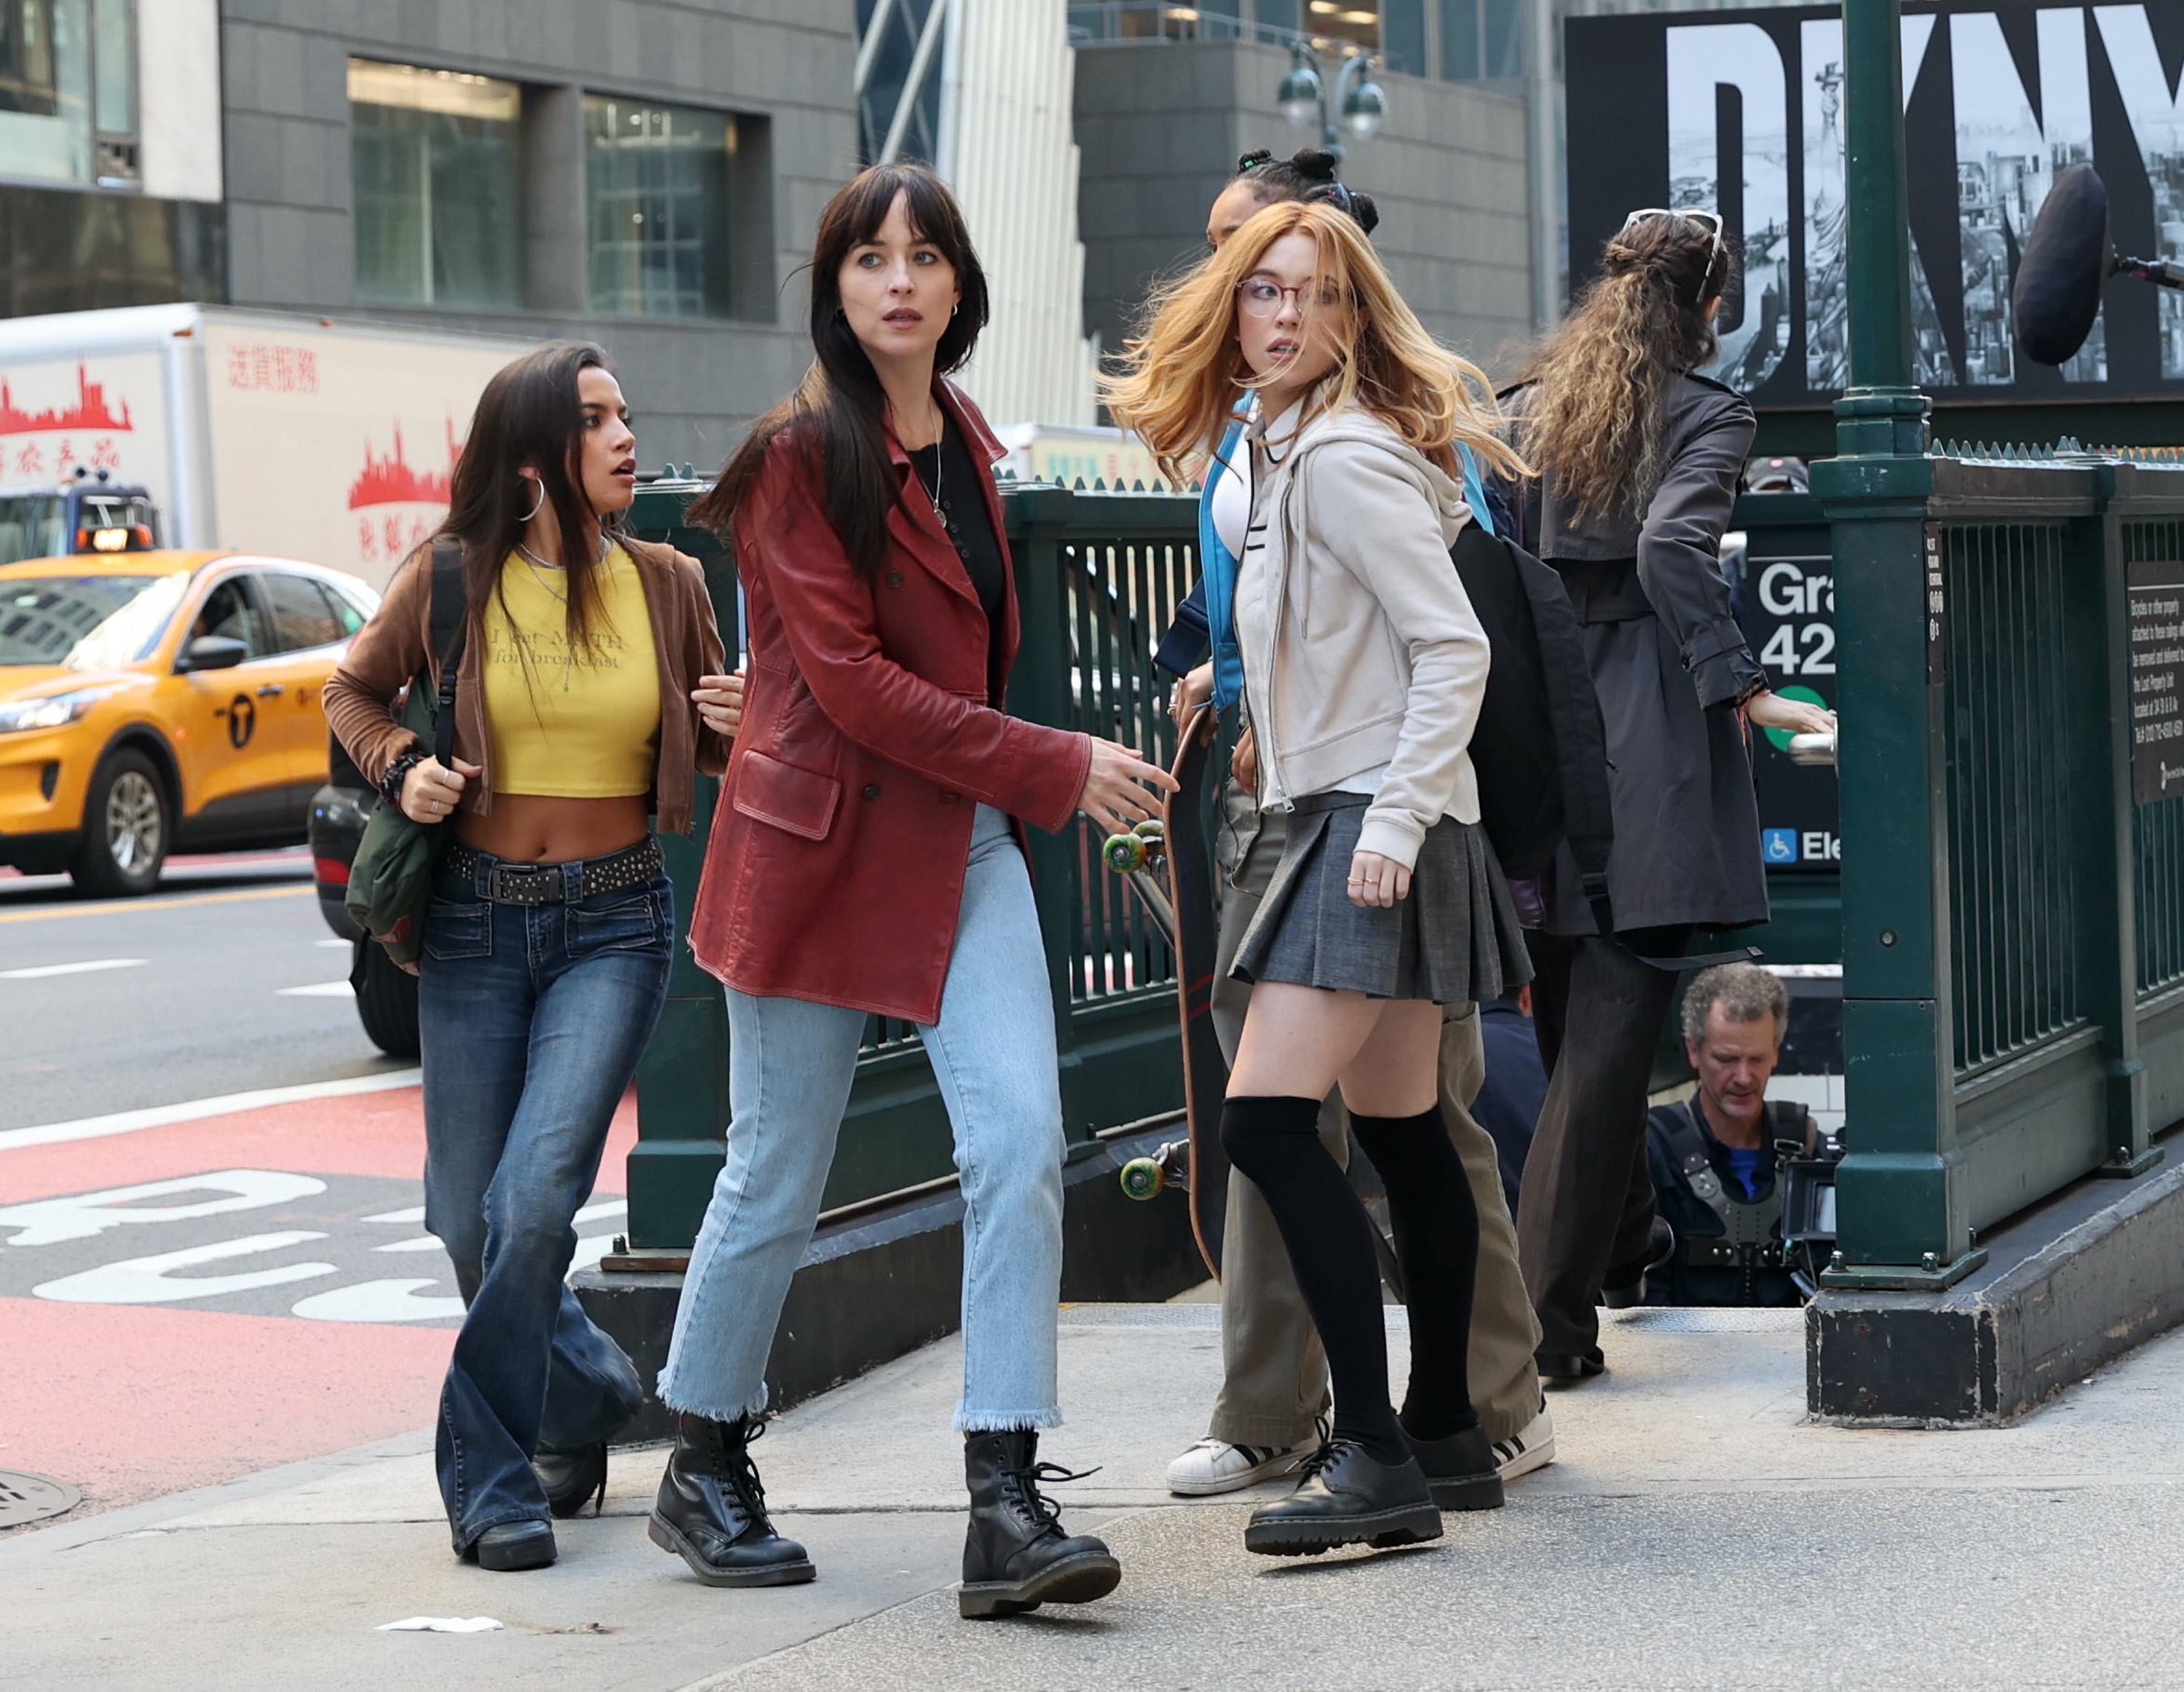 Four women, including Dakota, walking on a  NYC street, dressed in casual attire